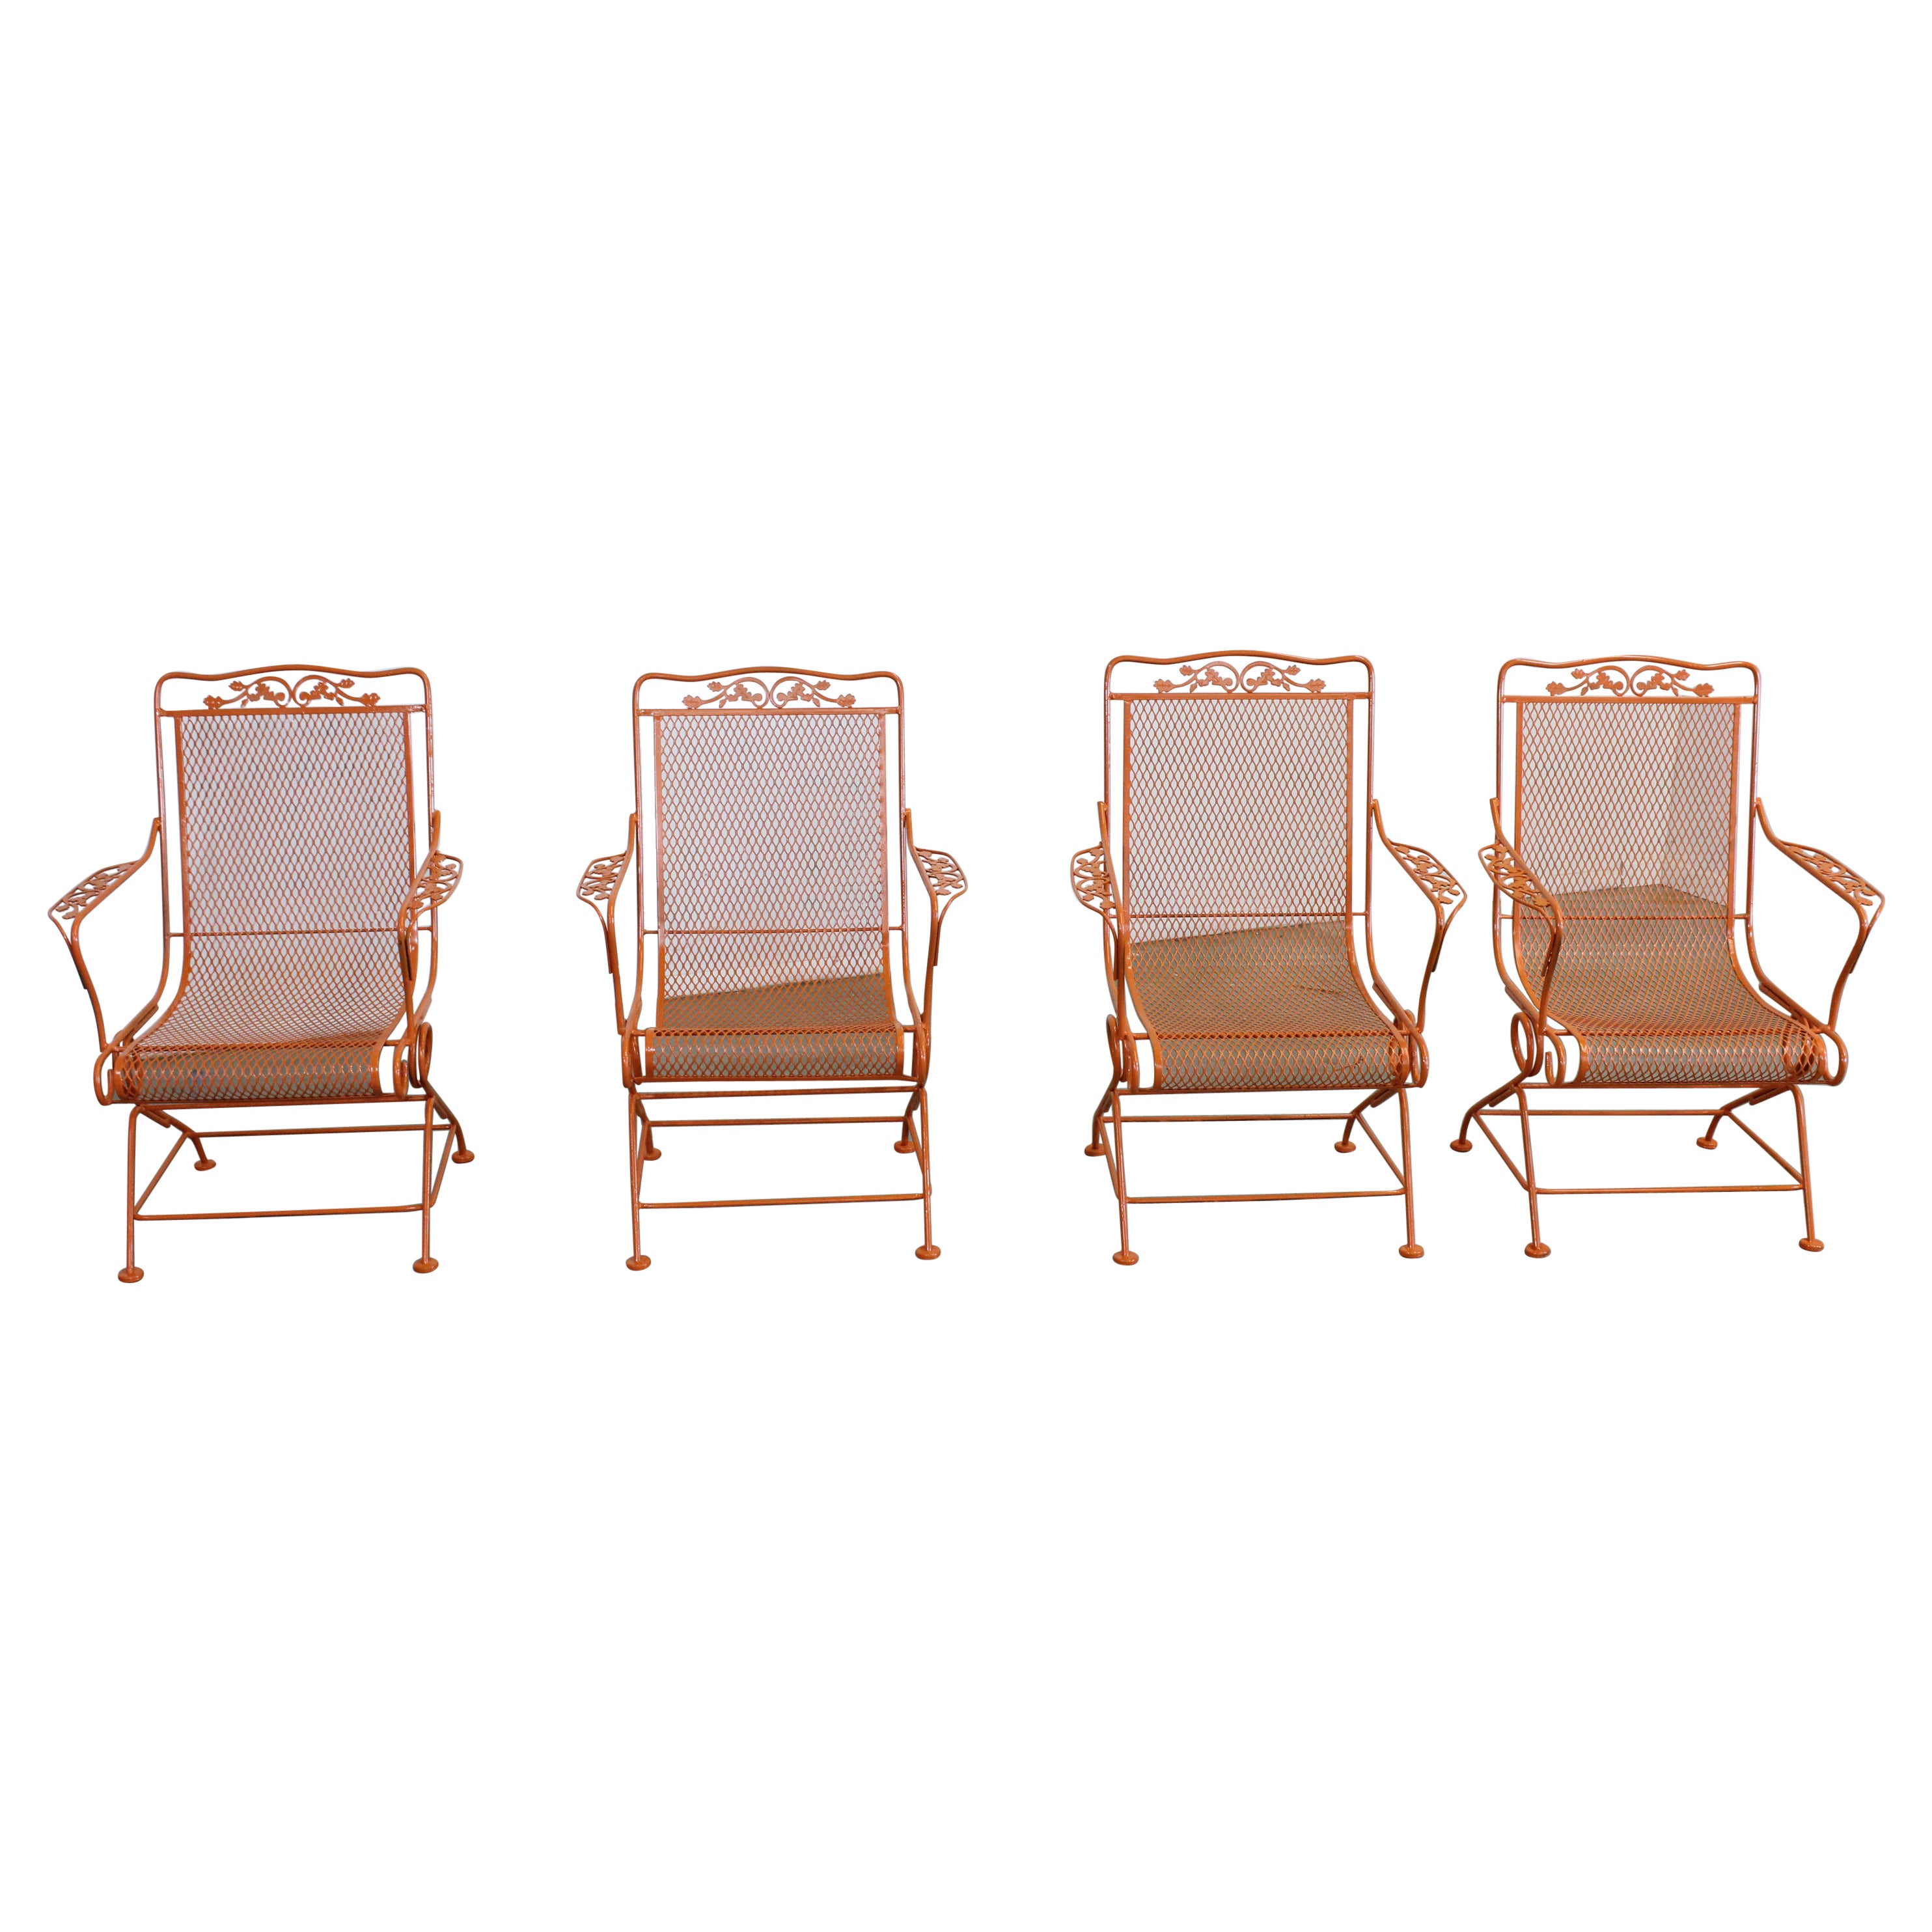 Set of 4 Mid-Century Outdoor Woodard Iron Springer Chairs